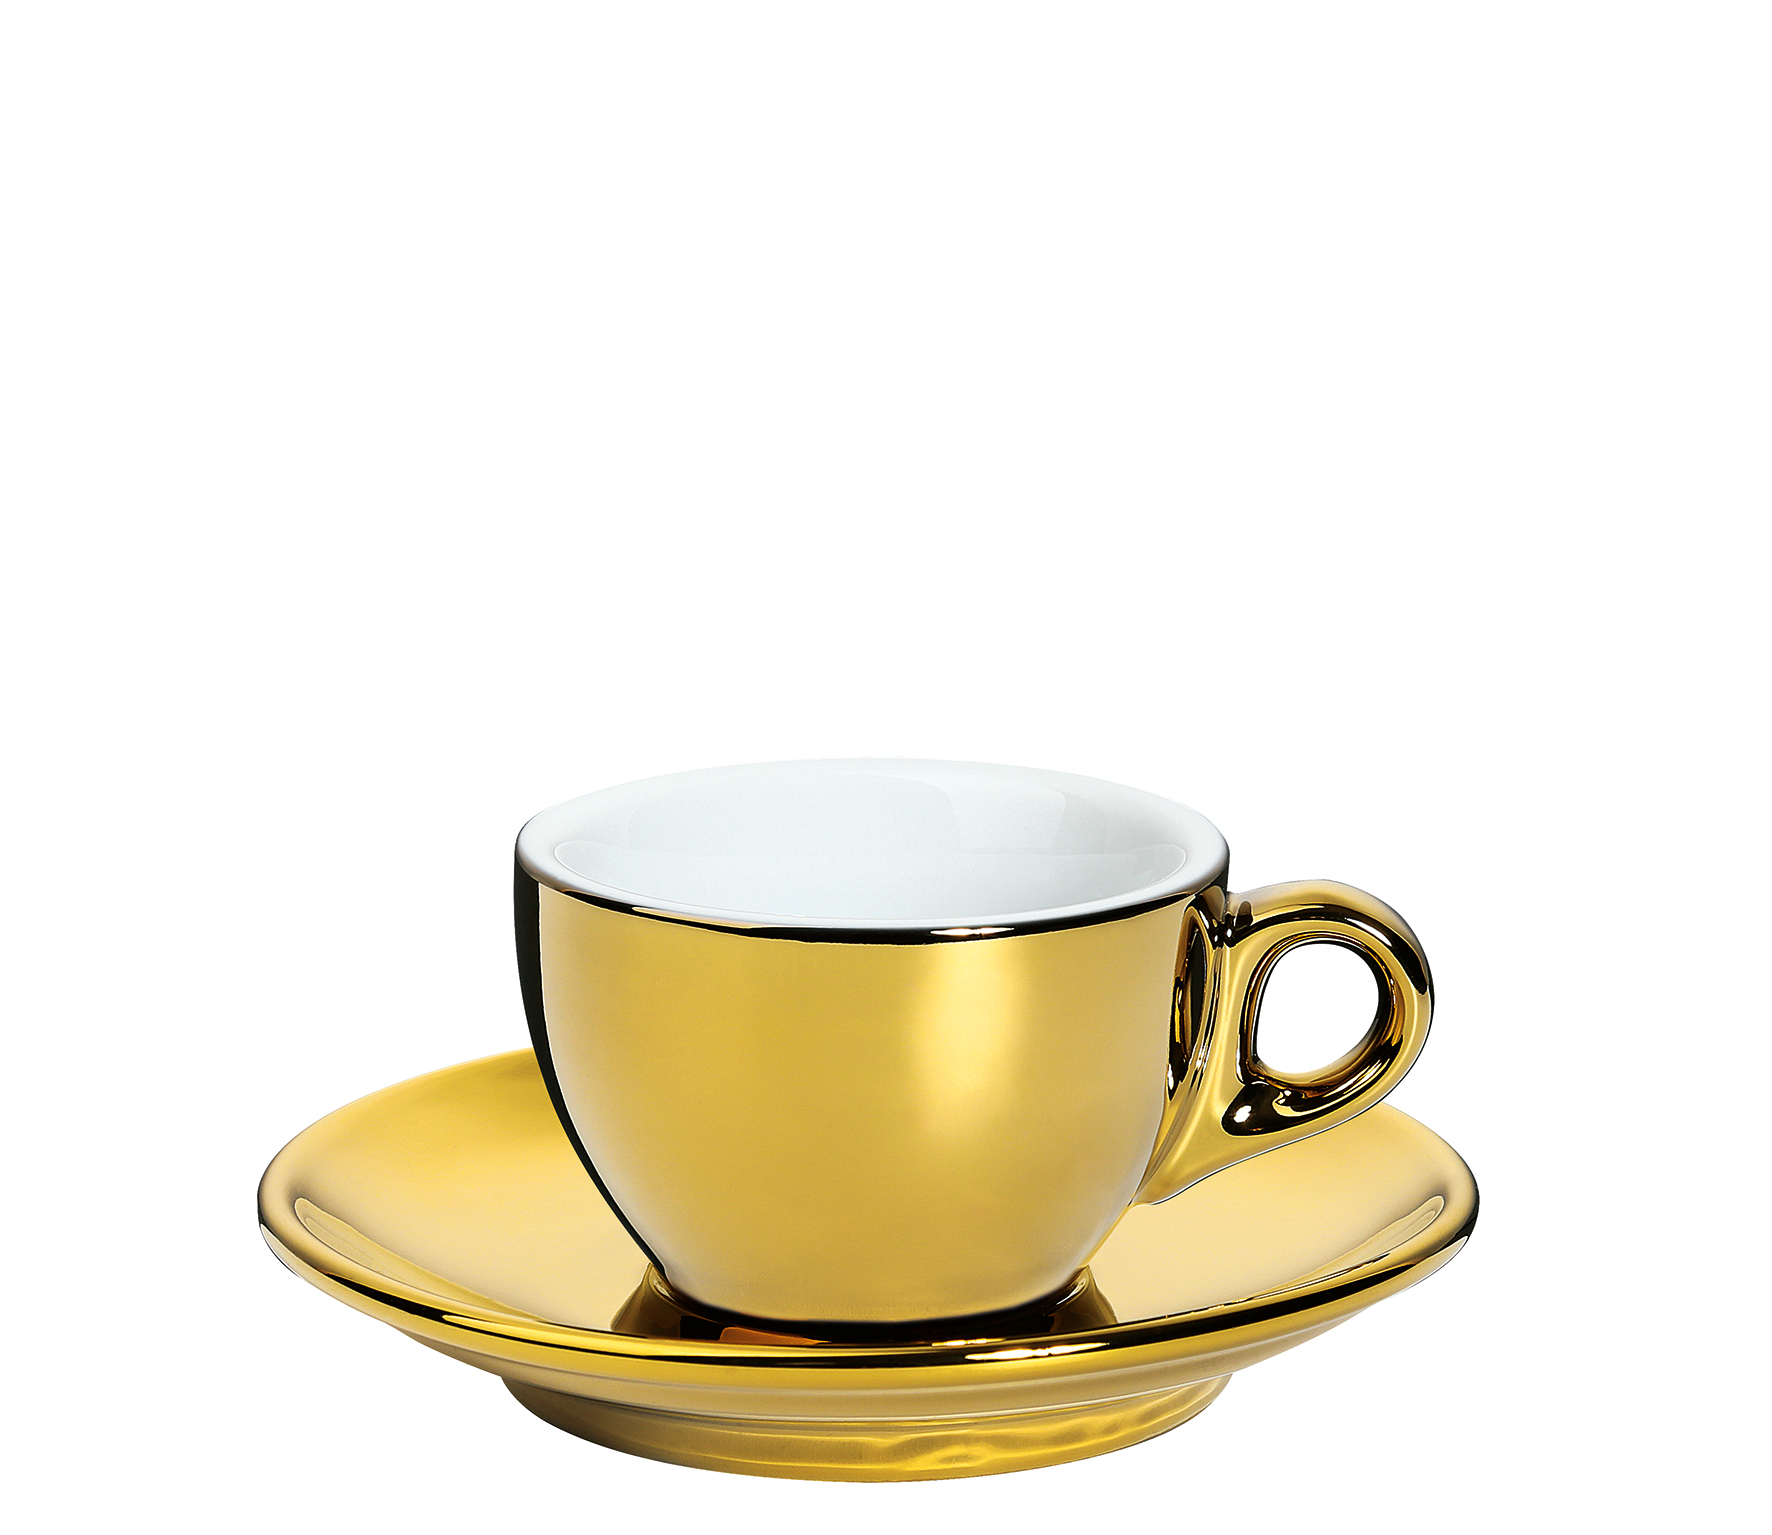 Espressotasse ROMA gold mit Untertasse  spülmaschinengeeignet lebensmittelgerecht Porzellan, extra dickwandig,, Inhalt 50ml